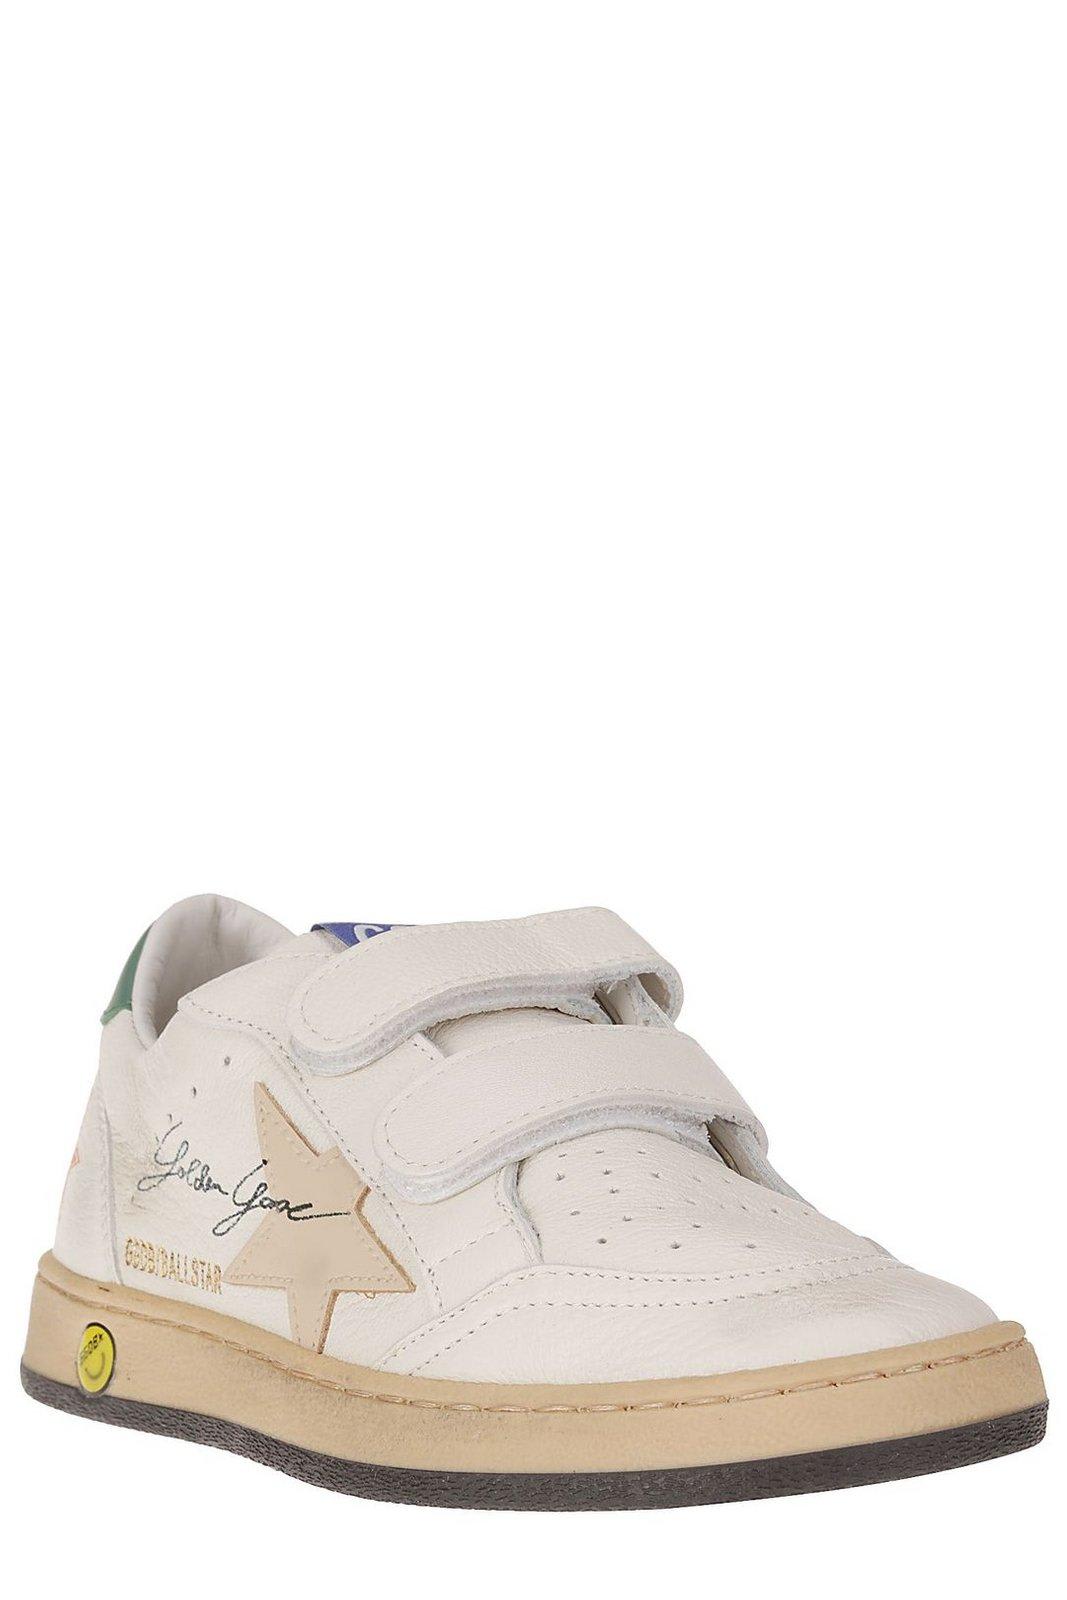 Shop Golden Goose Round Toe Sneakers In White/smoke Grey/green